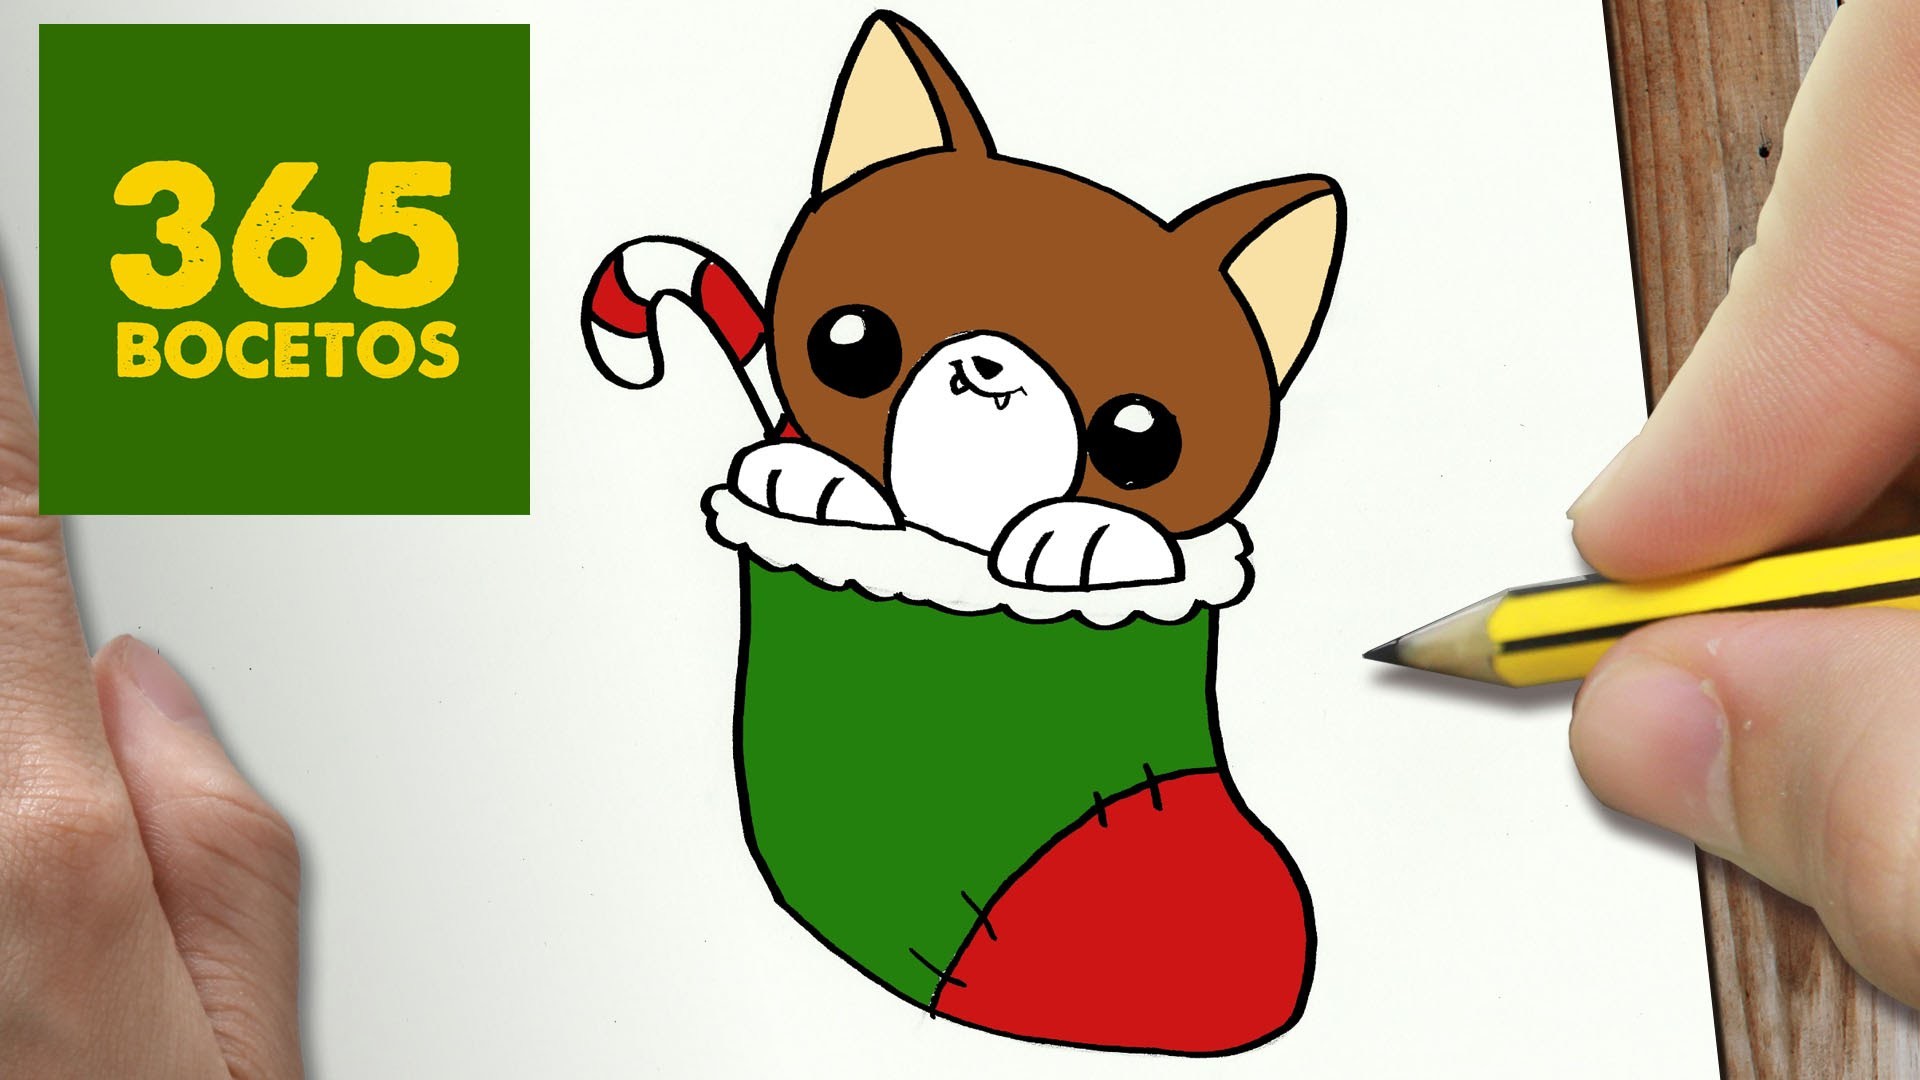 COMO DIBUJAR UN GATO PARA NAVIDAD PASO A PASO: Dibujos kawaii navideños - How to draw a cat